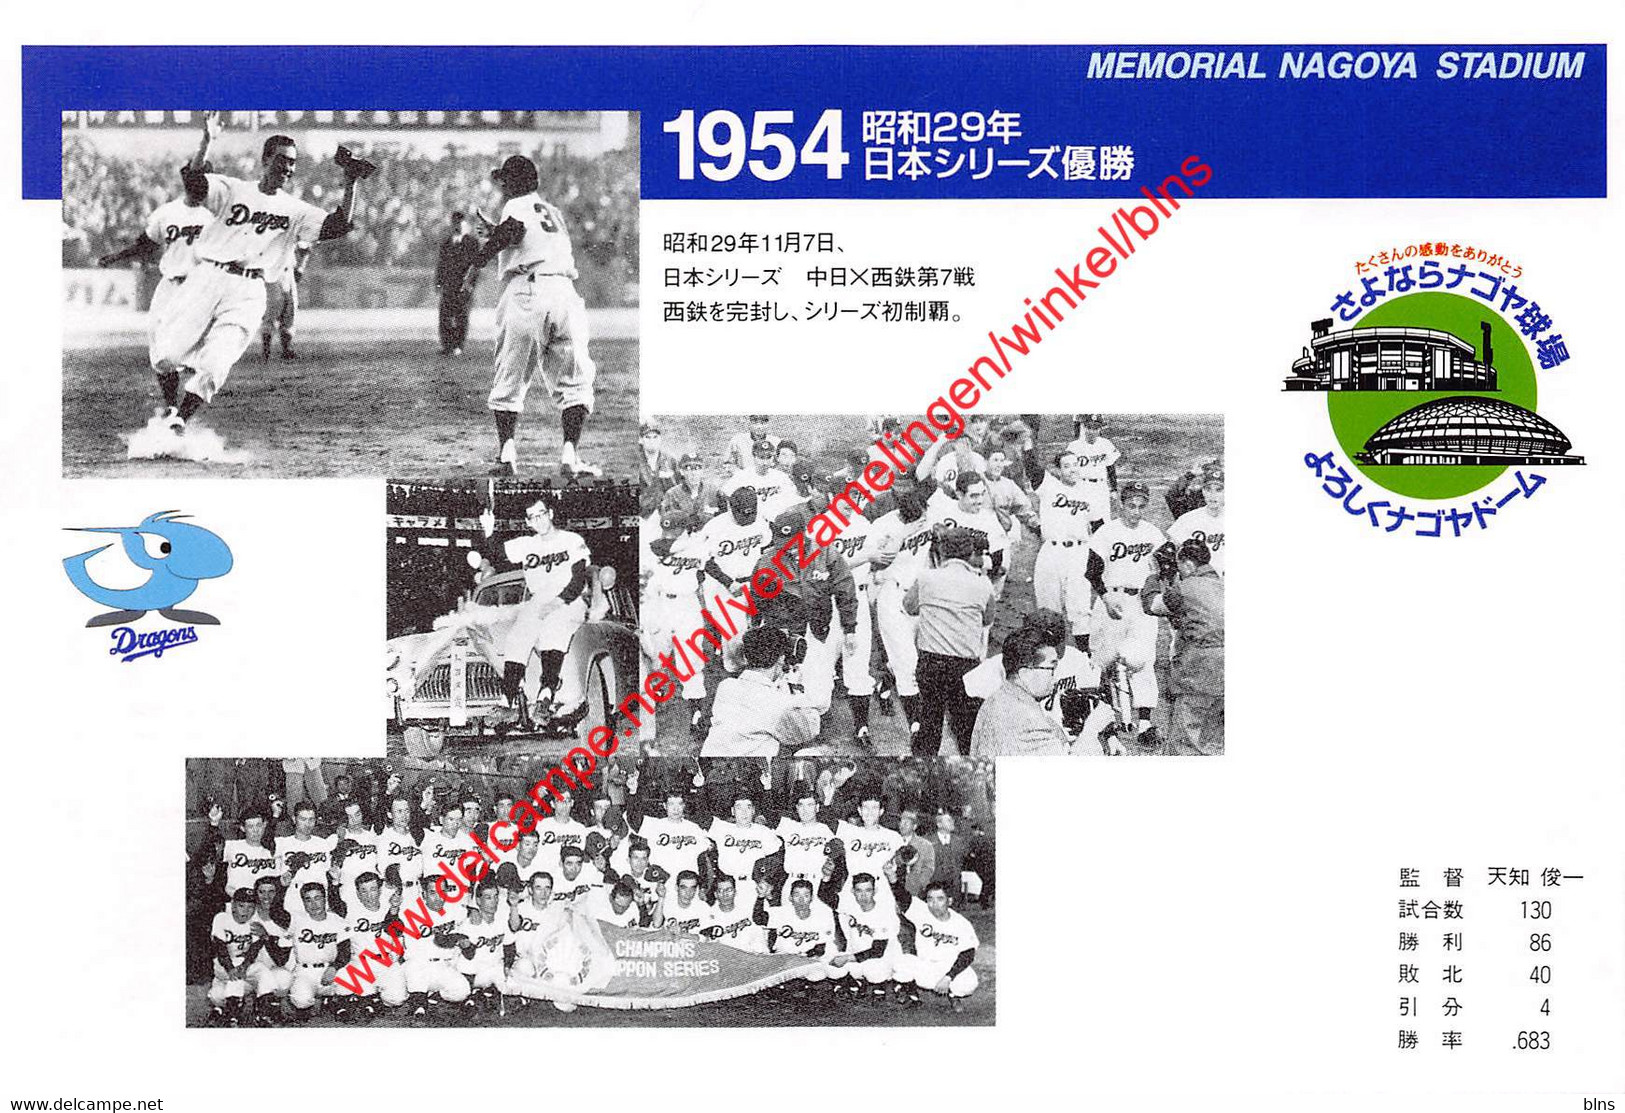 Memorial Nagoya Stadium - Dragons - Baseball - Japan Nippon - Nagoya